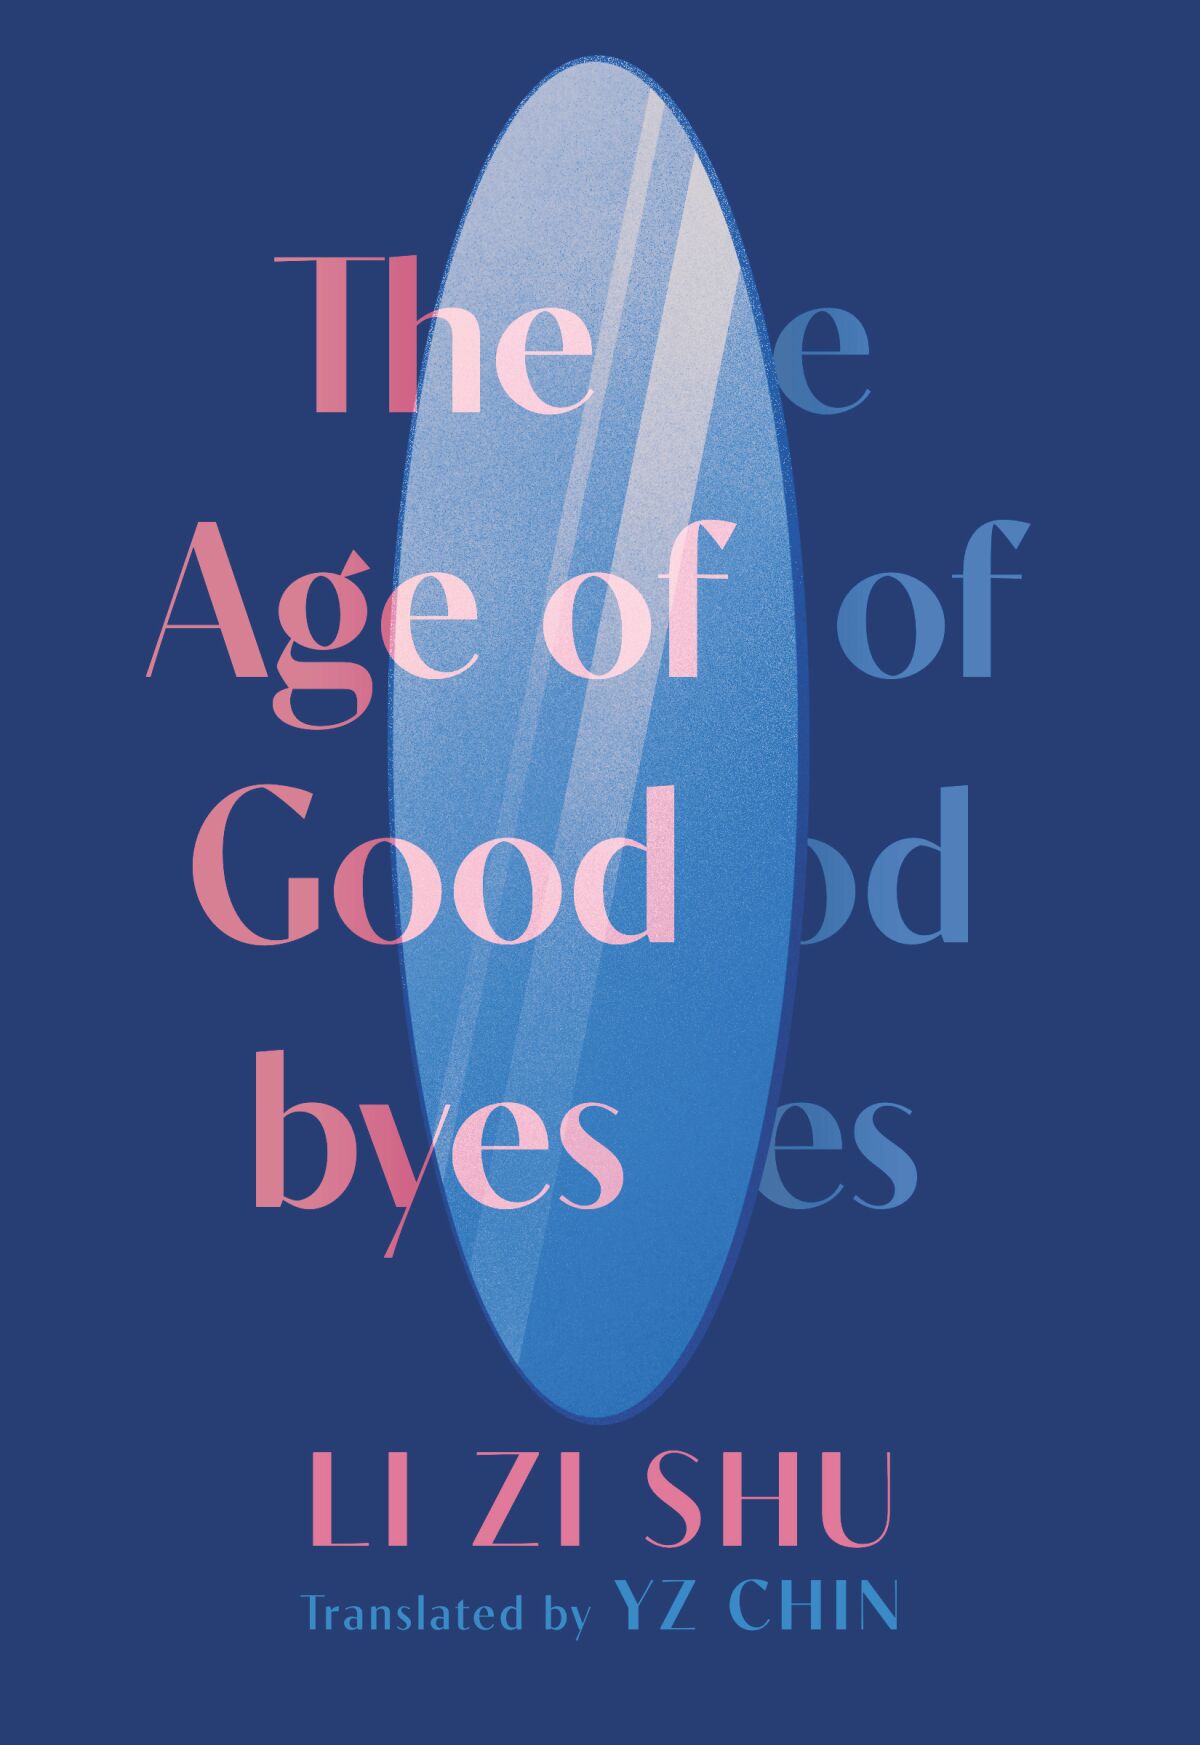 "The Age of Goodbyes" by Li Zi Shu